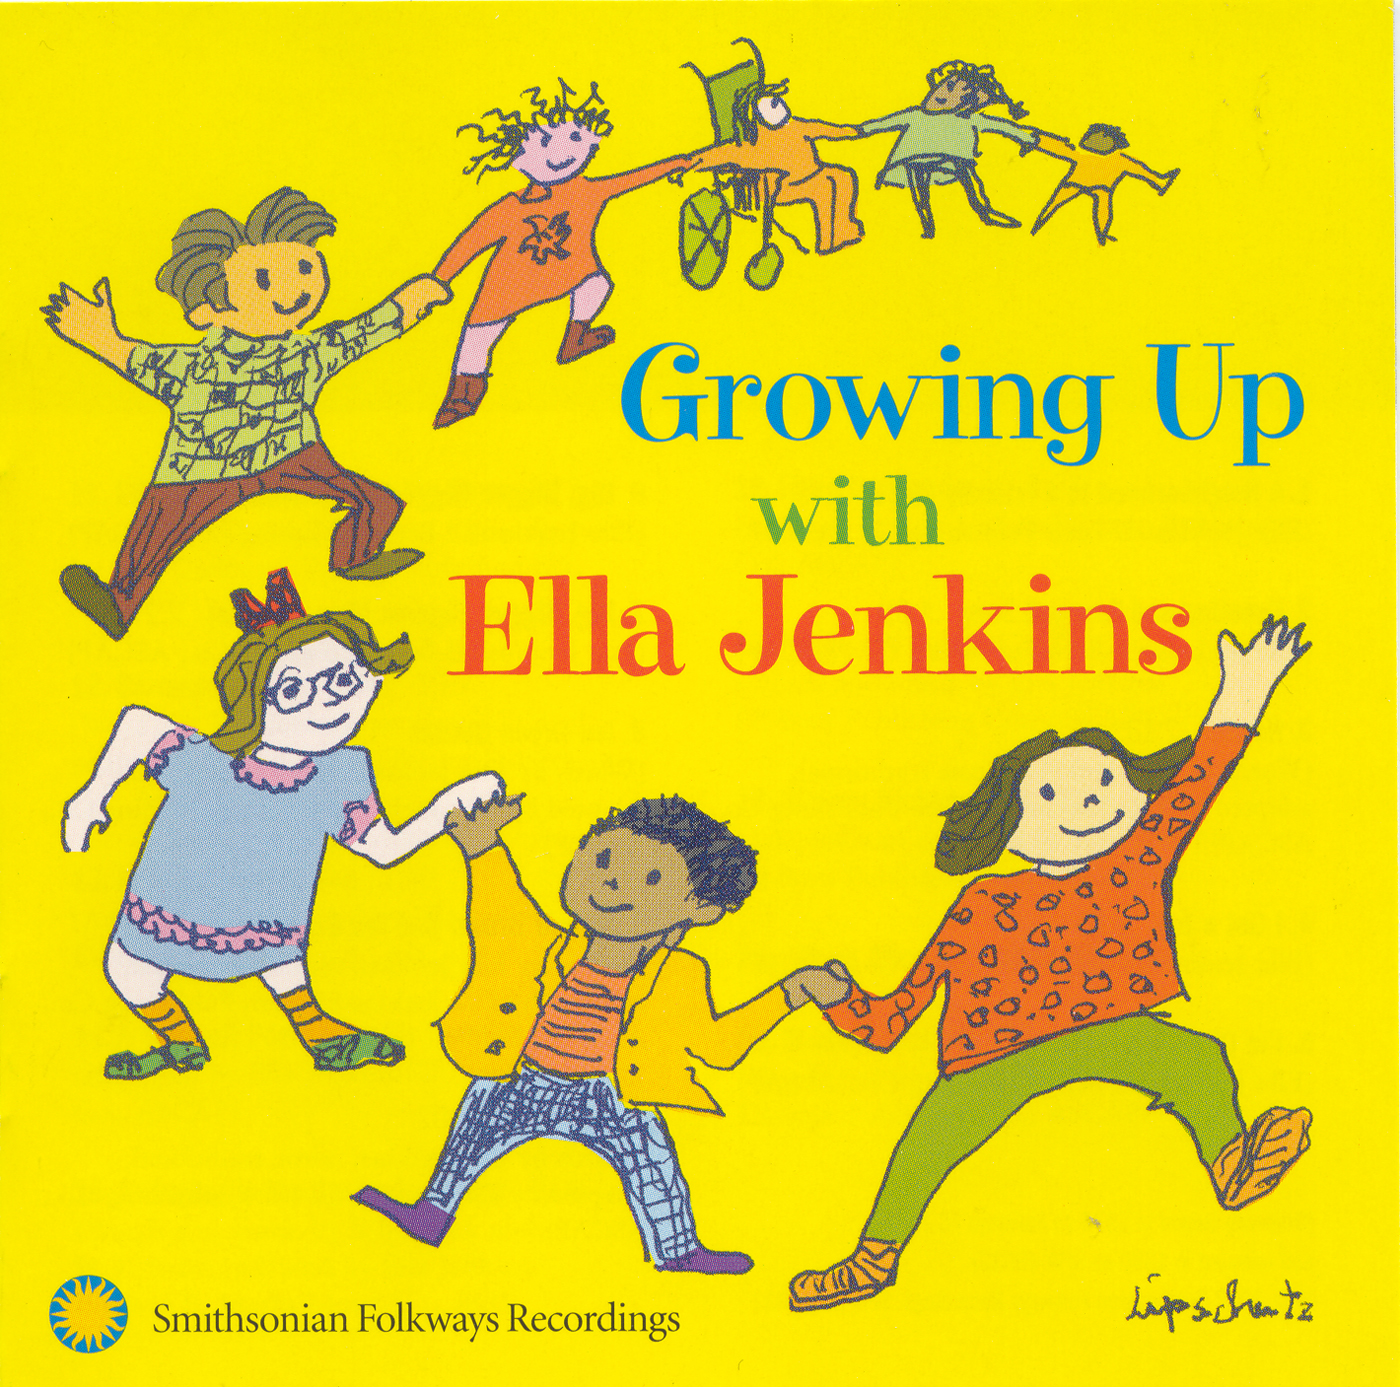 Growing Up with Ella Jenkins CD artwork